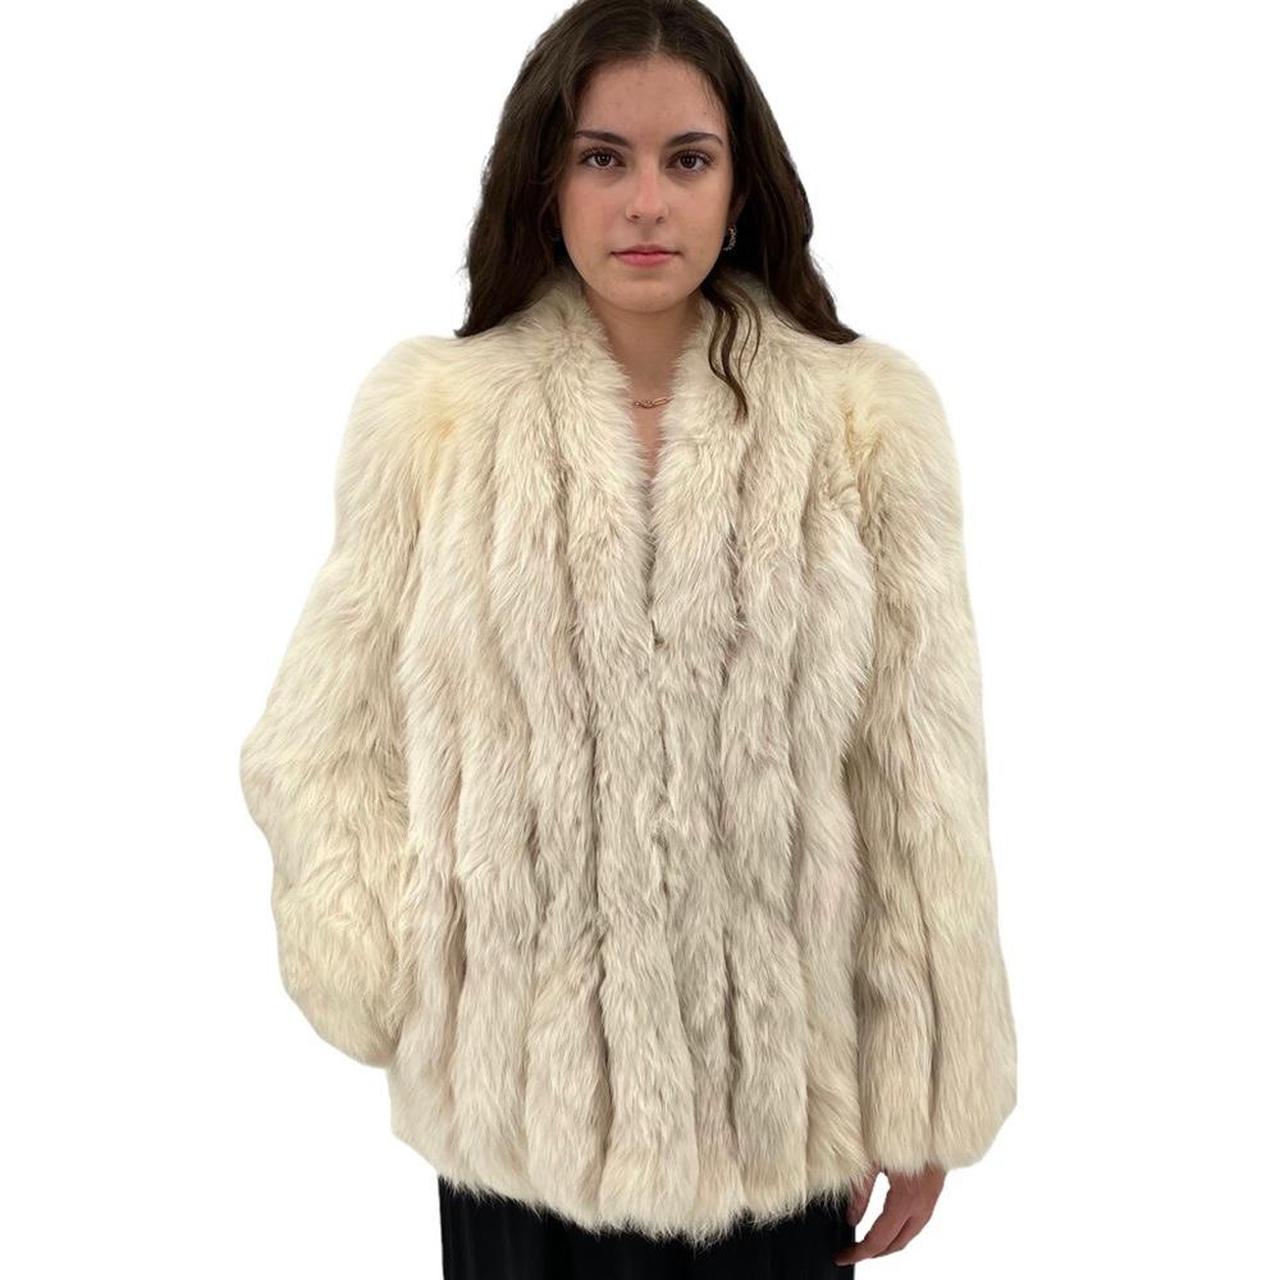 Product Image 2 - Real vintage fur coat. 

‼️